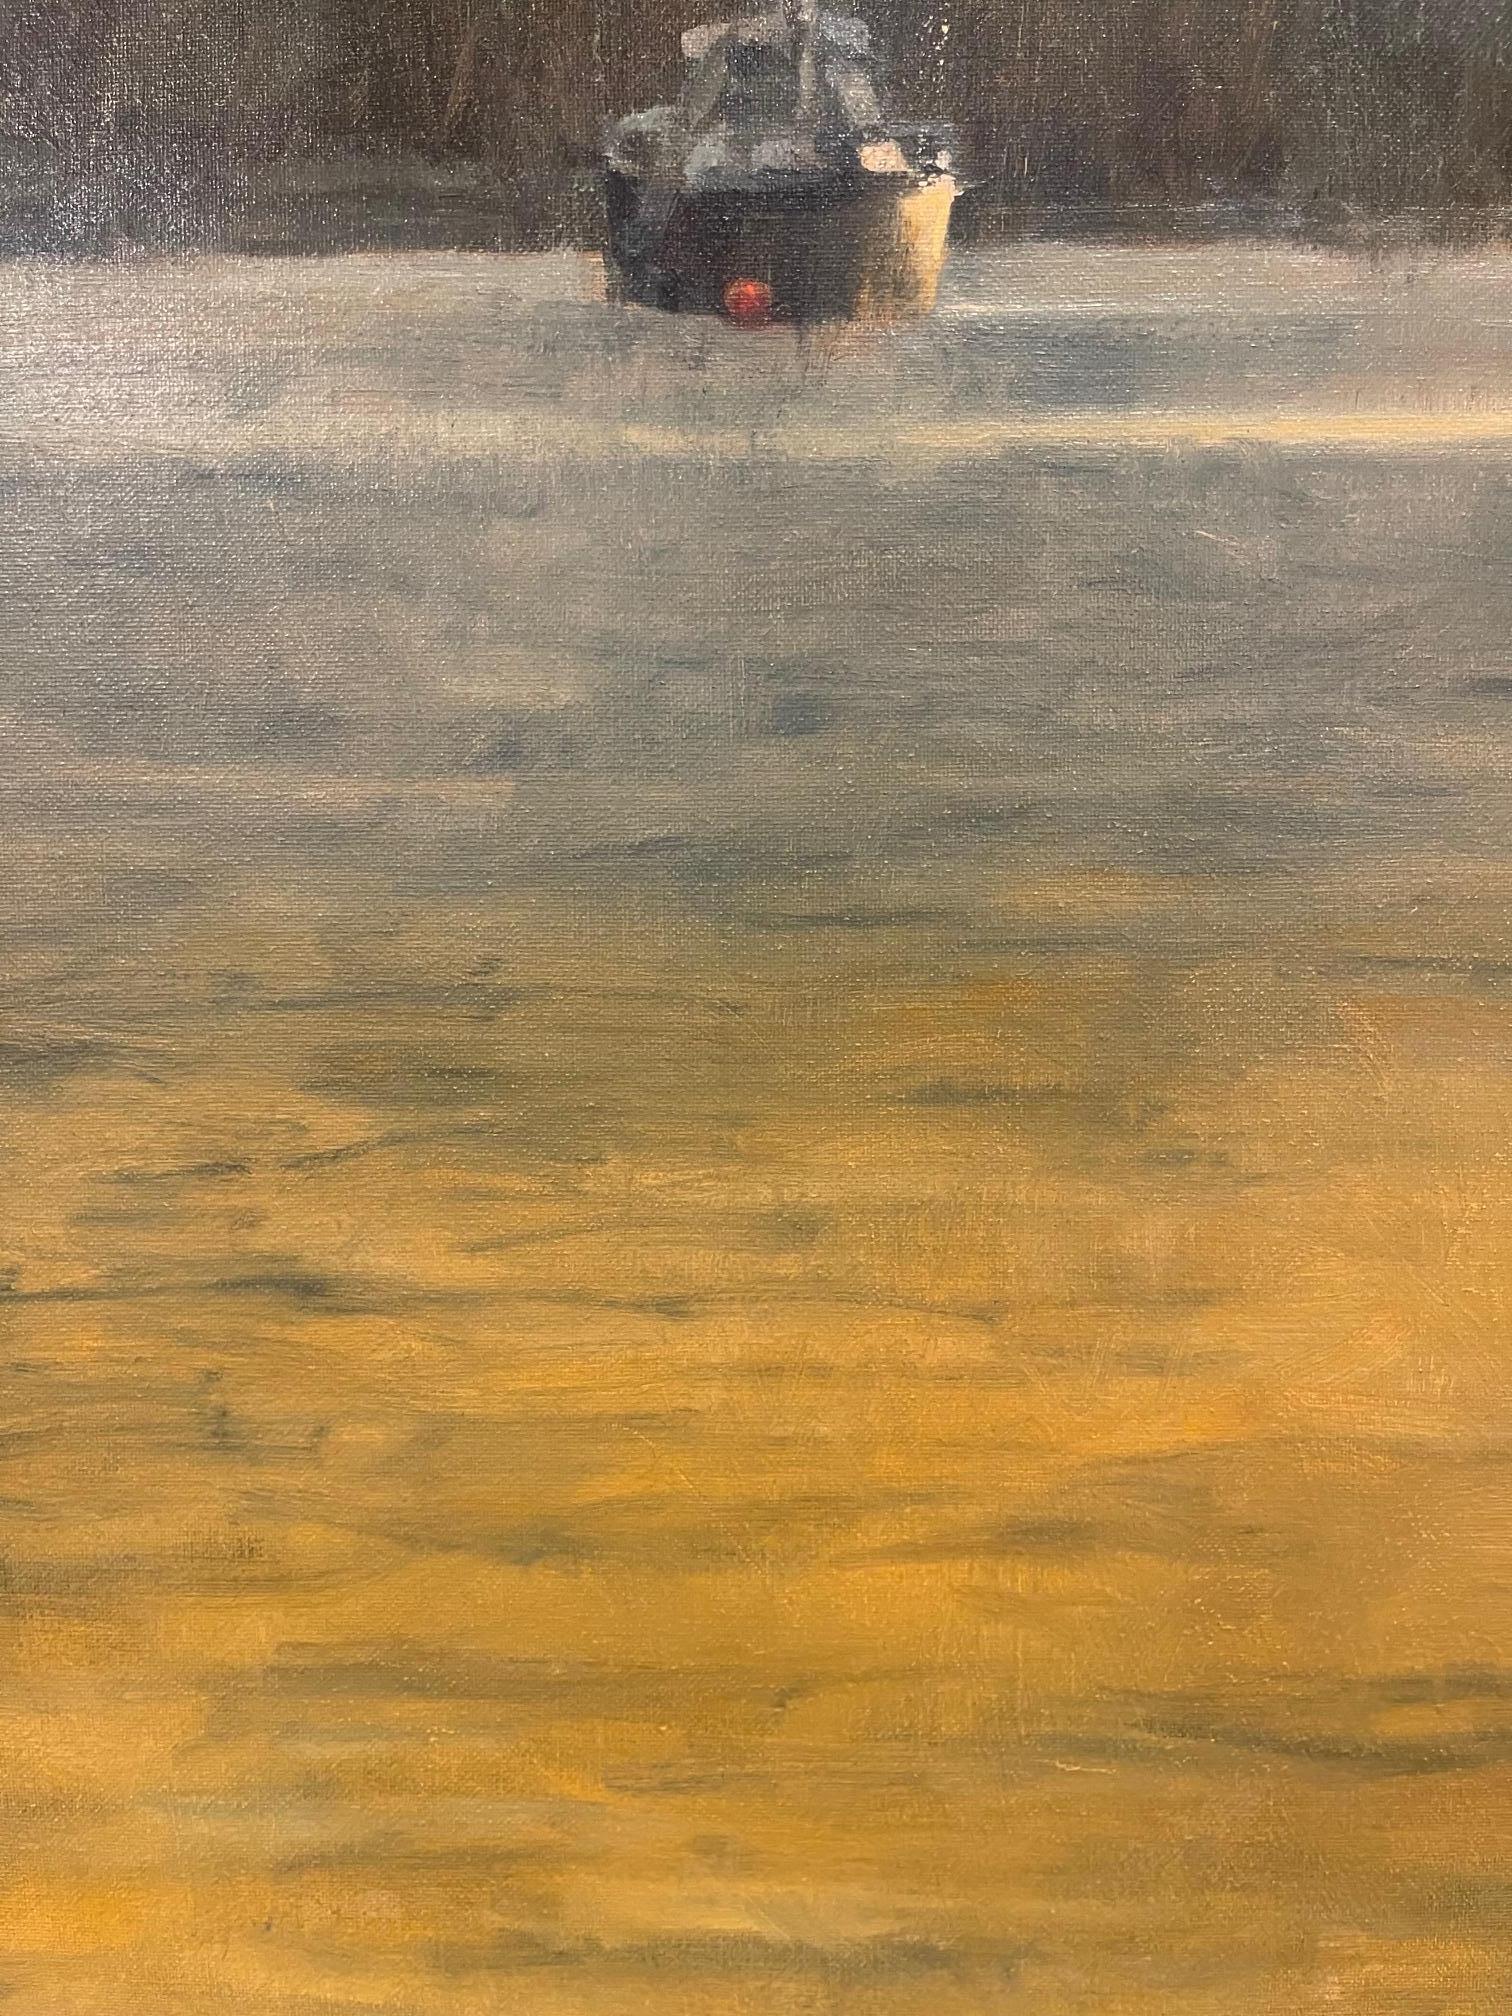 Framed Oil on Canvas Panel 